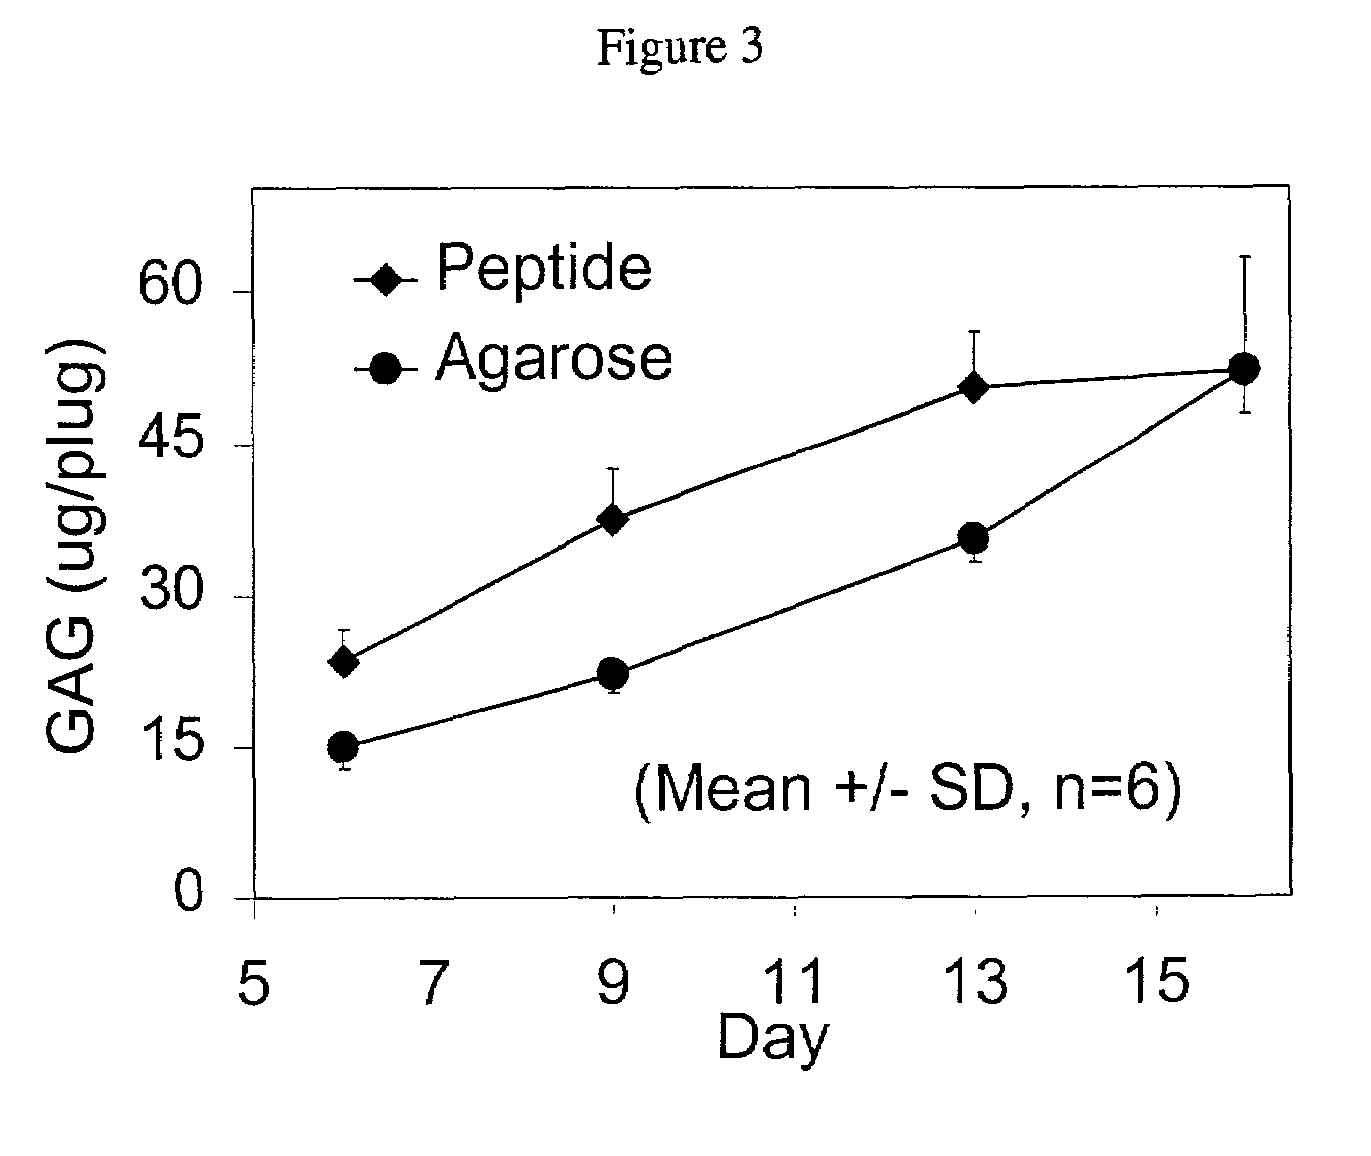 Macroscopic scaffold containing amphiphilic peptides encapsulating cells